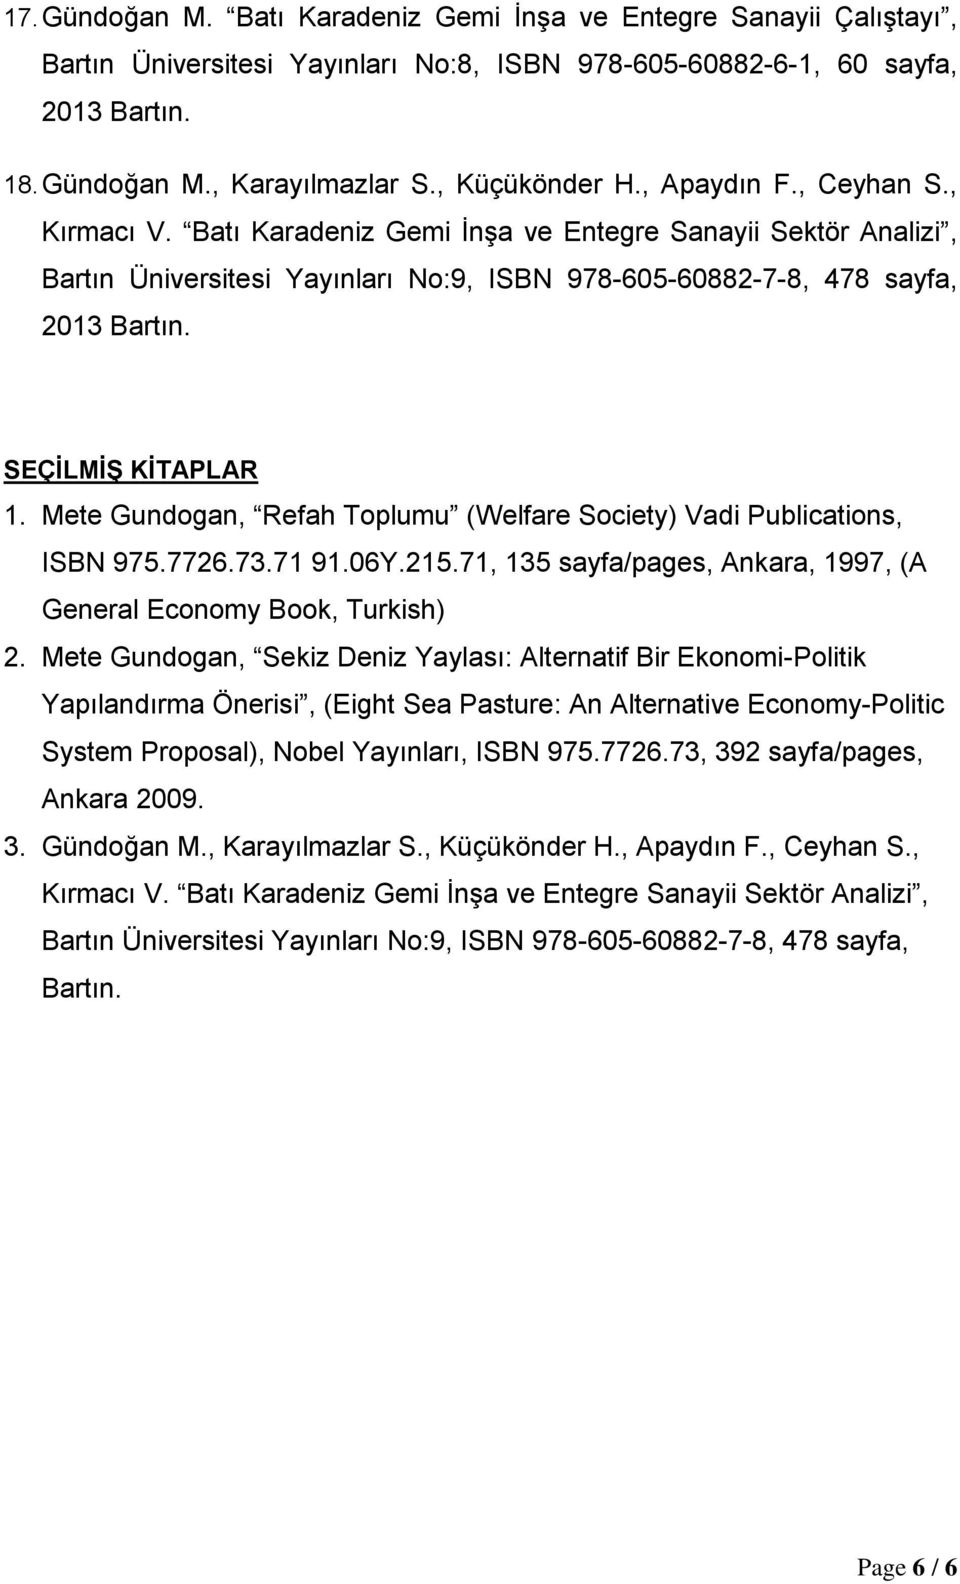 SEÇİLMİŞ KİTAPLAR 1. Mete Gundogan, Refah Toplumu (Welfare Society) Vadi Publications, ISBN 975.7726.73.71 91.06Y.215.71, 135 sayfa/pages, Ankara, 1997, (A General Economy Book, Turkish) 2.